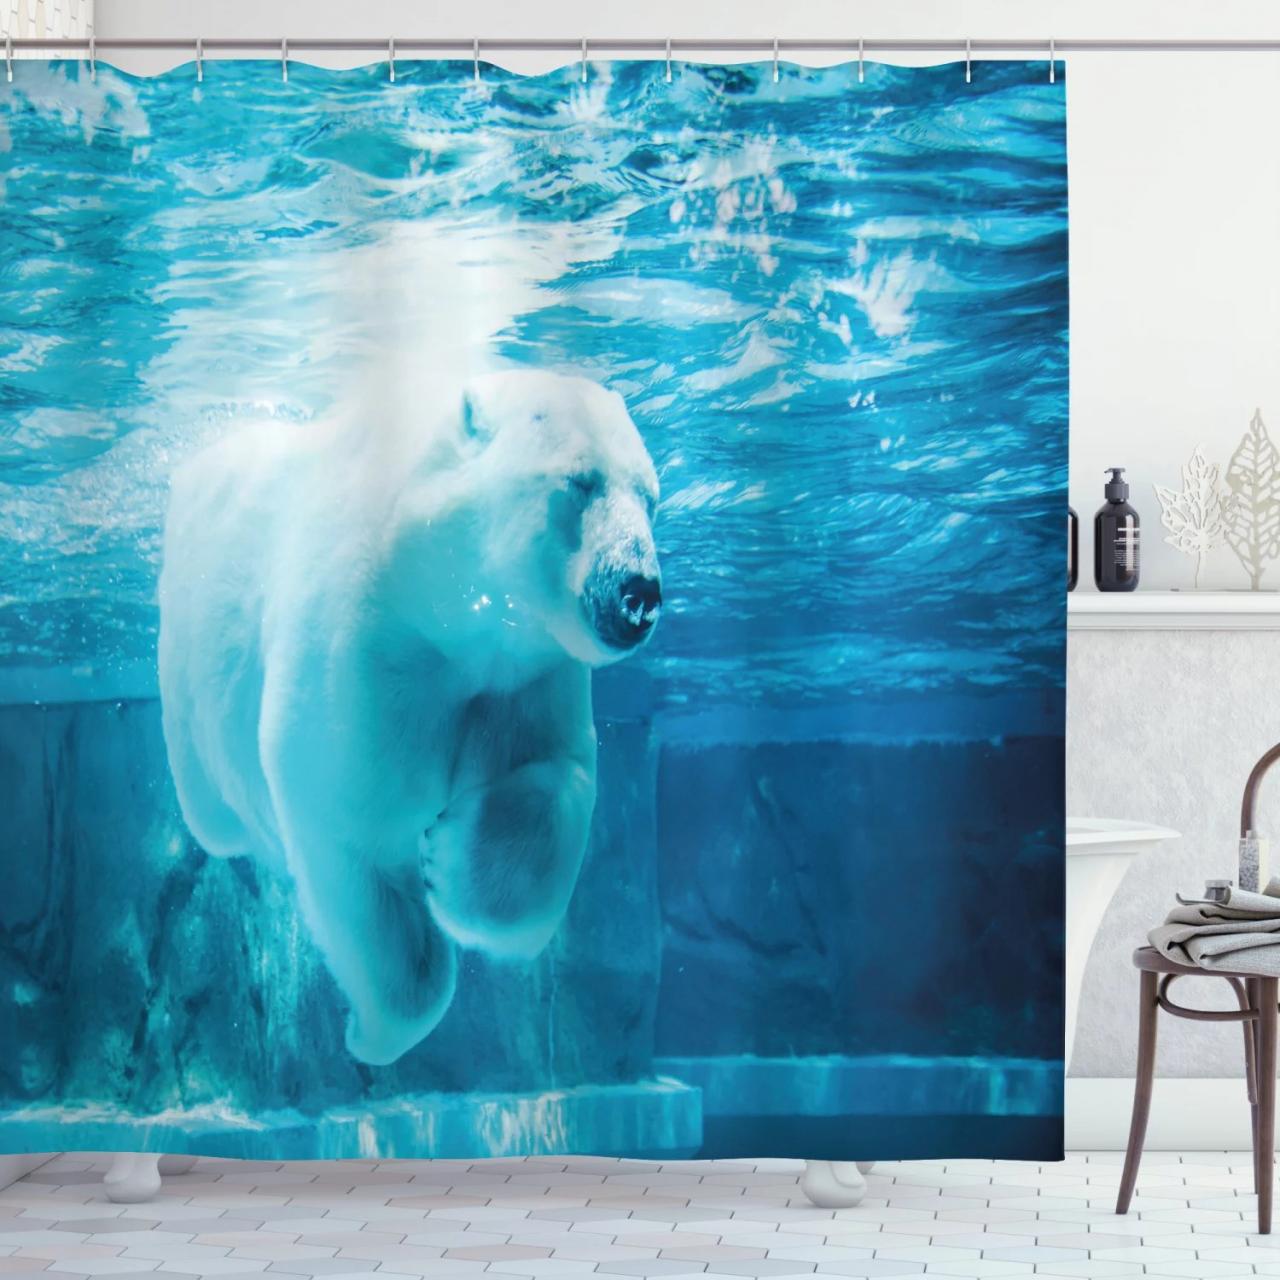 Bear Shower Curtain, Arctic Polar Bear Dipping into Water Swimming